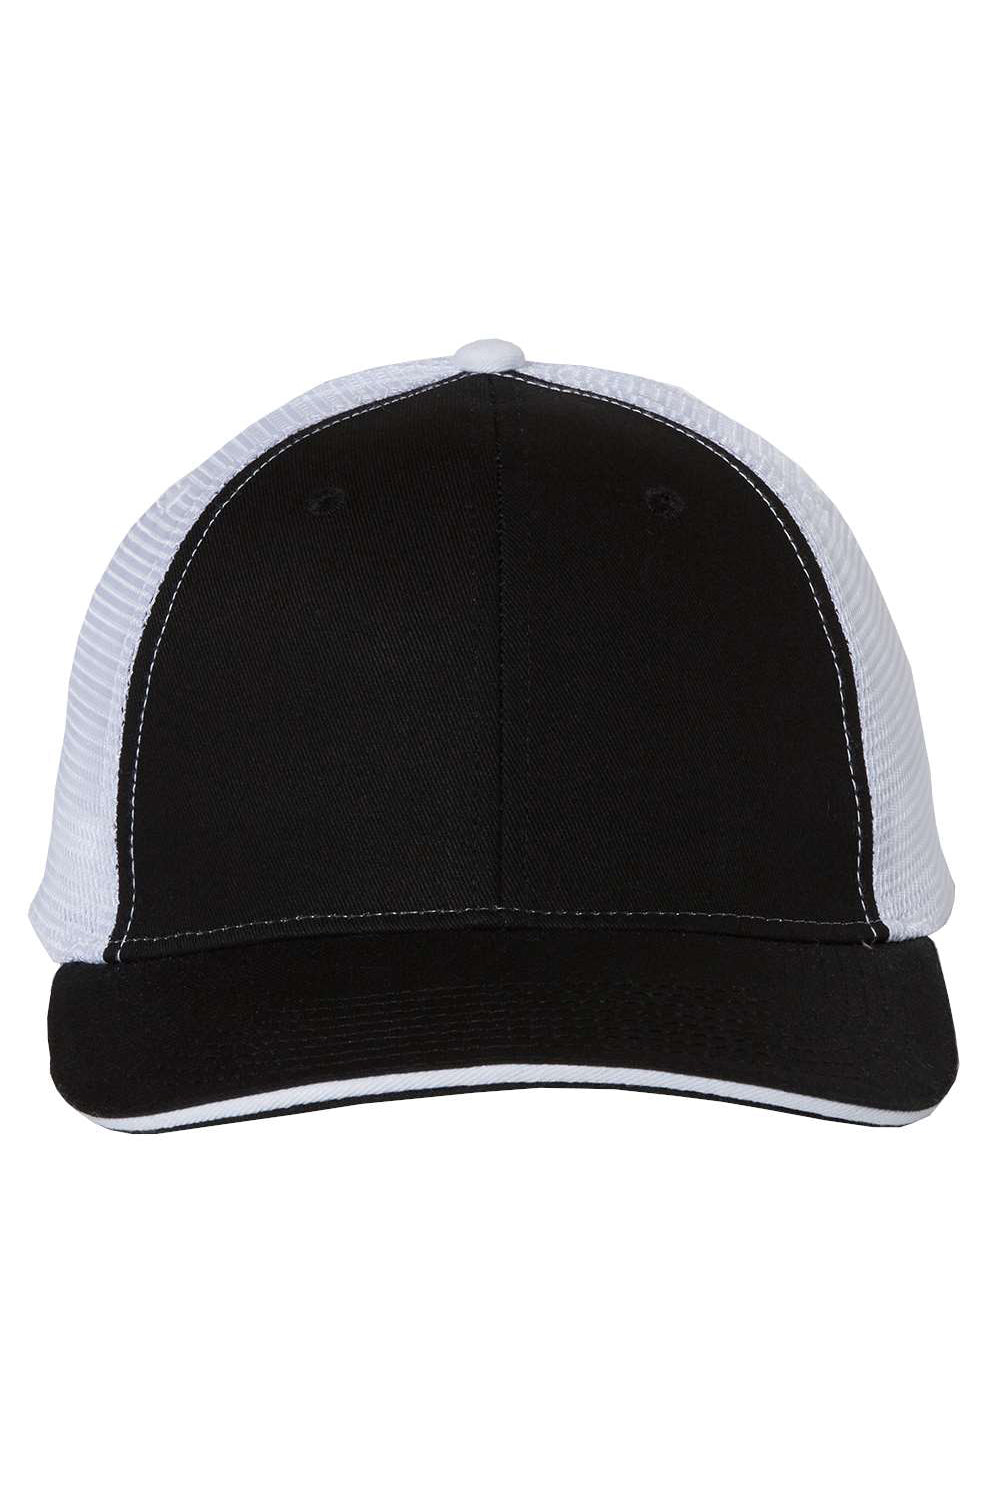 Valucap S102 Mens Sandwich Trucker Hat Black/White Flat Front